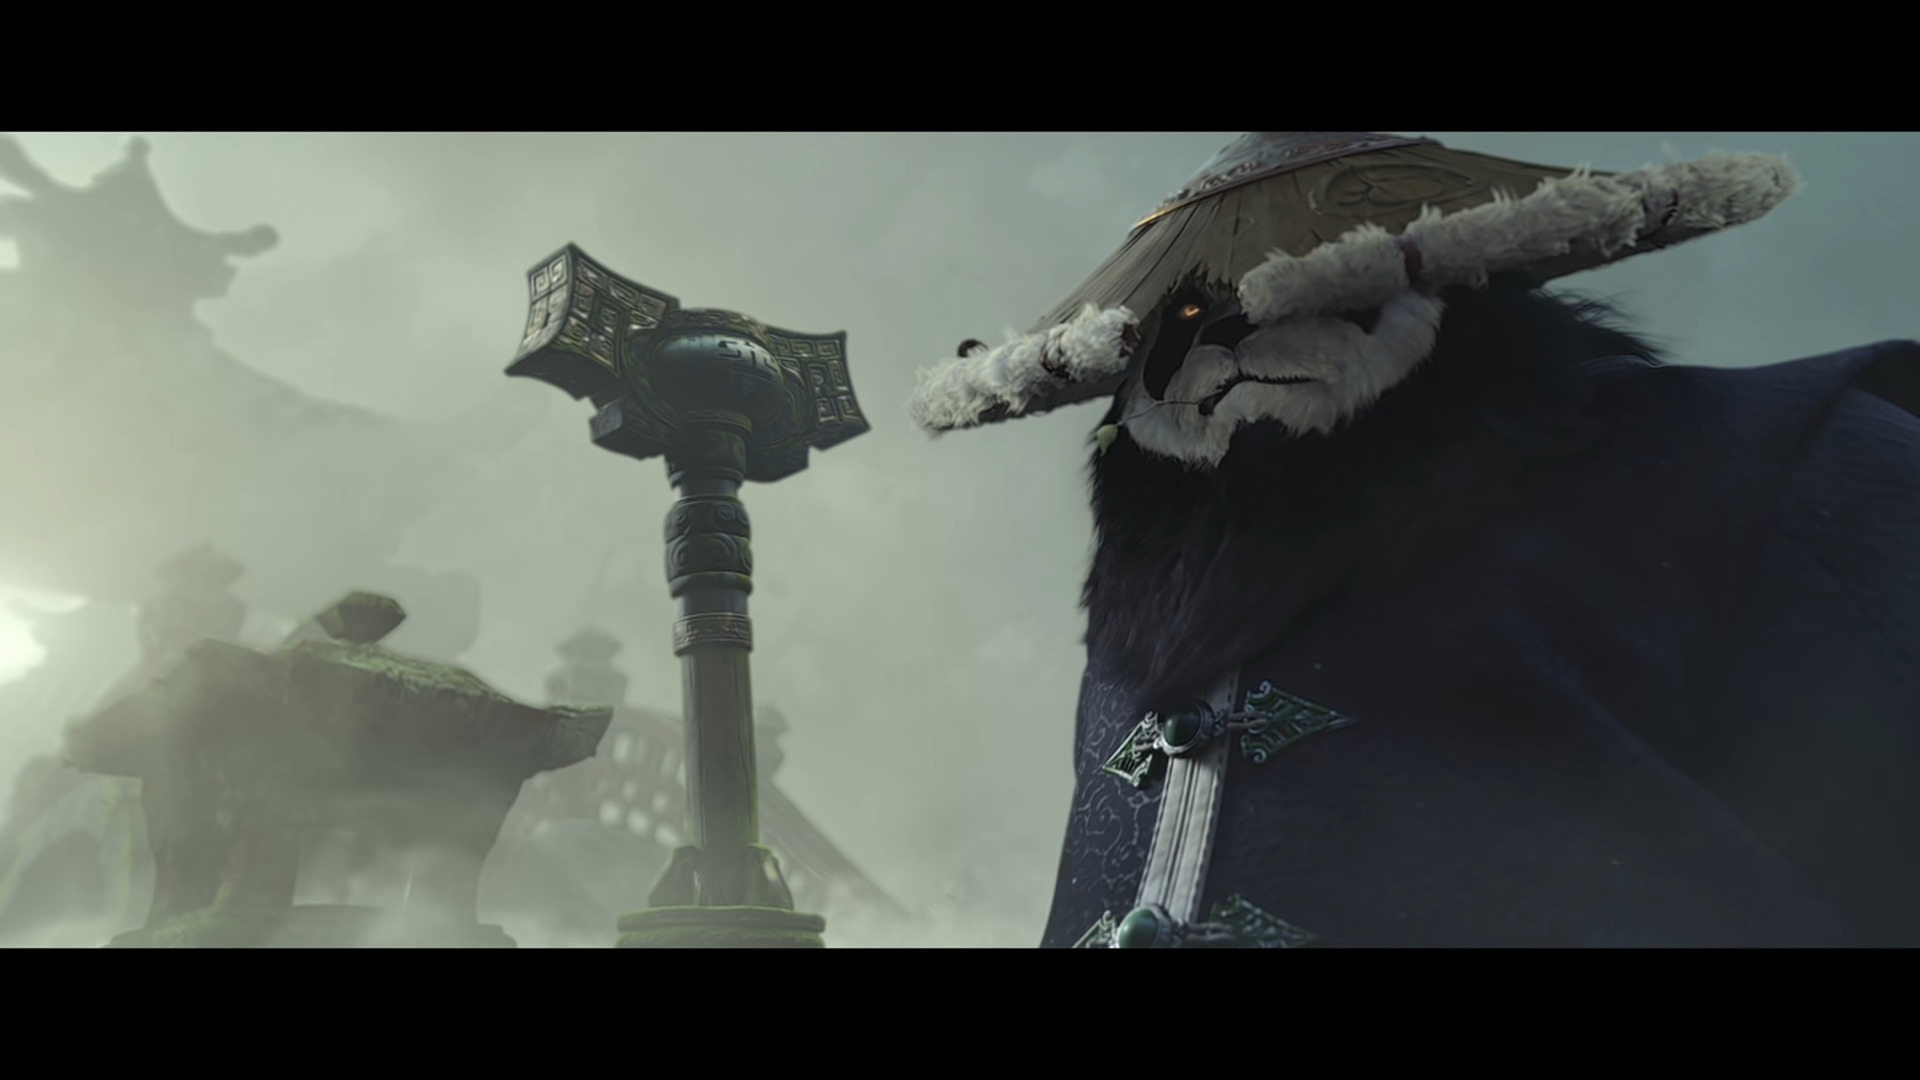 A native pandaren makes itself known through the fog via World of Warcraft: Mists of Pandaria (2012), Blizzard Entertainment